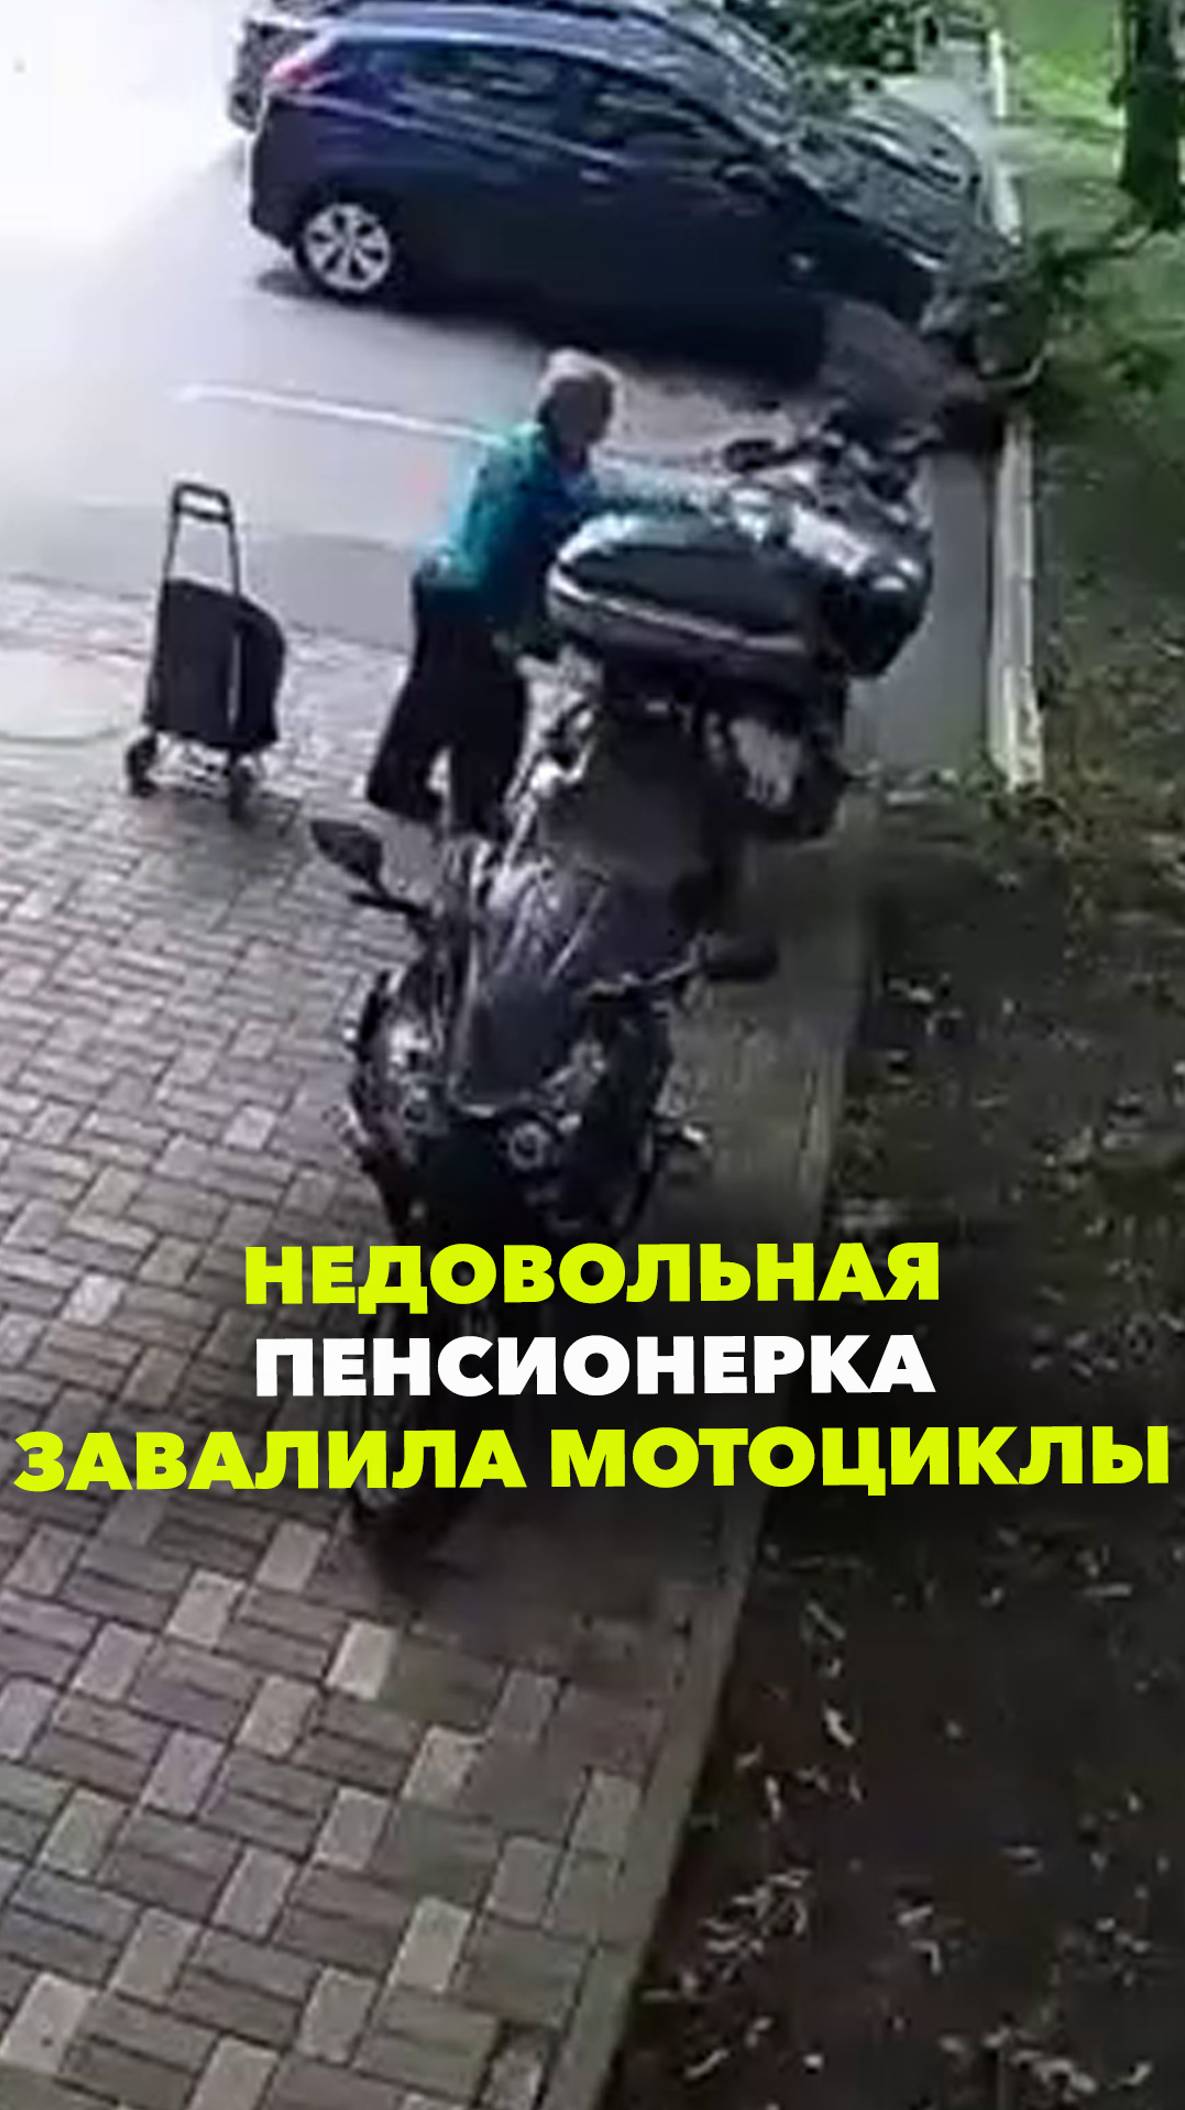 В Геленджике заметили борца с мотоциклами